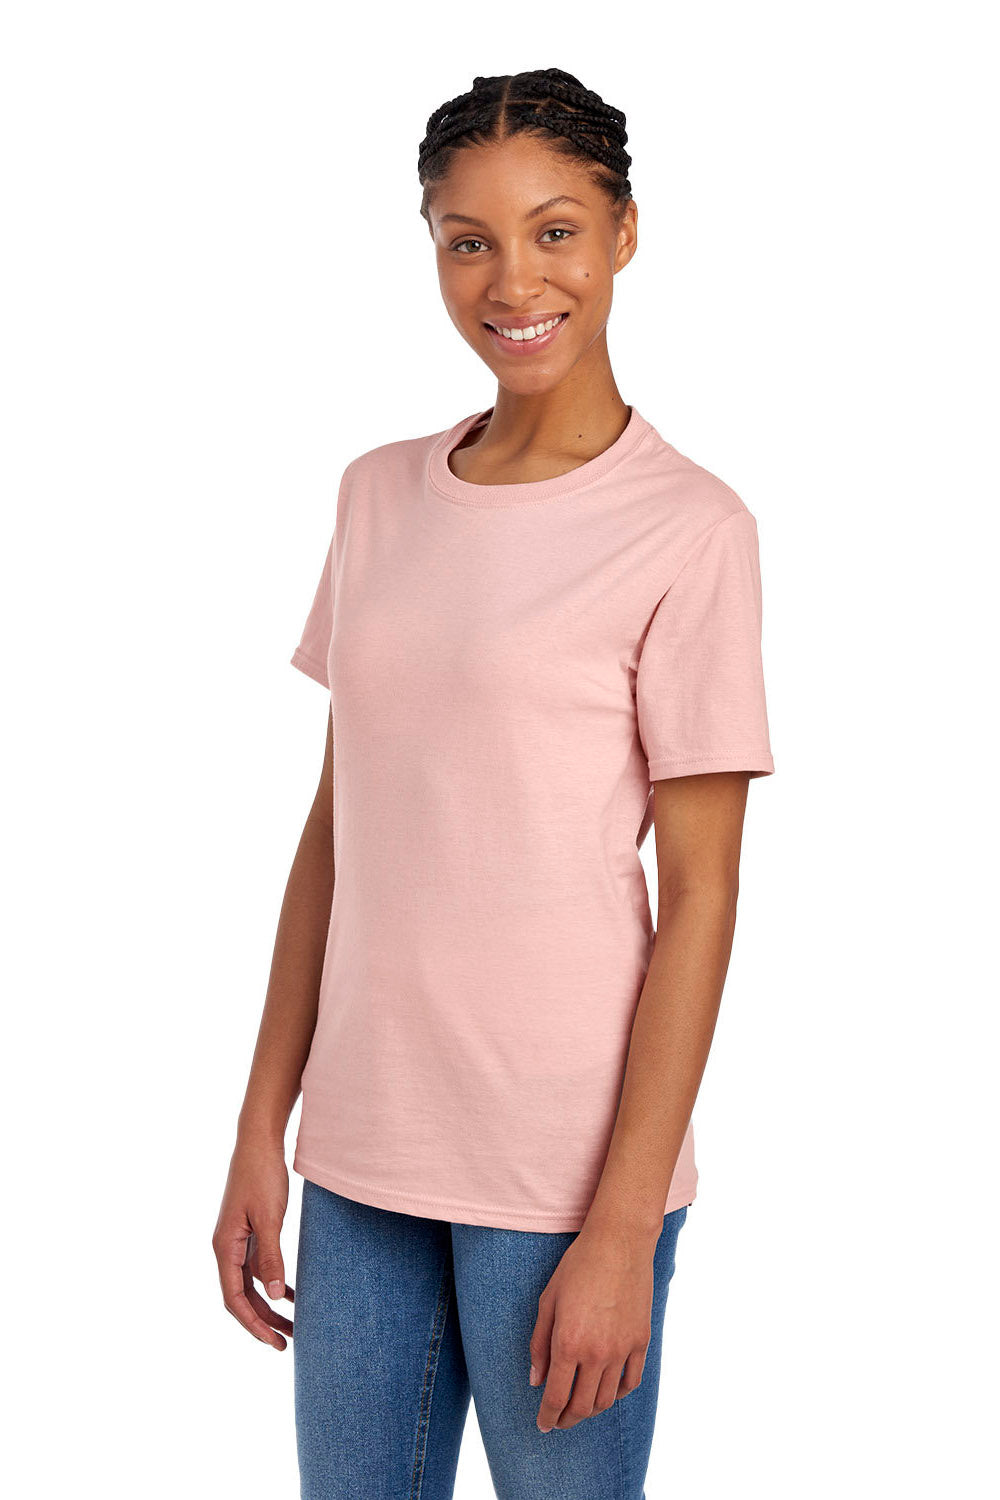 Fruit Of The Loom 3930/3931/3930R Mens HD Jersey Short Sleeve Crewneck T-Shirt Blush Pink 3Q